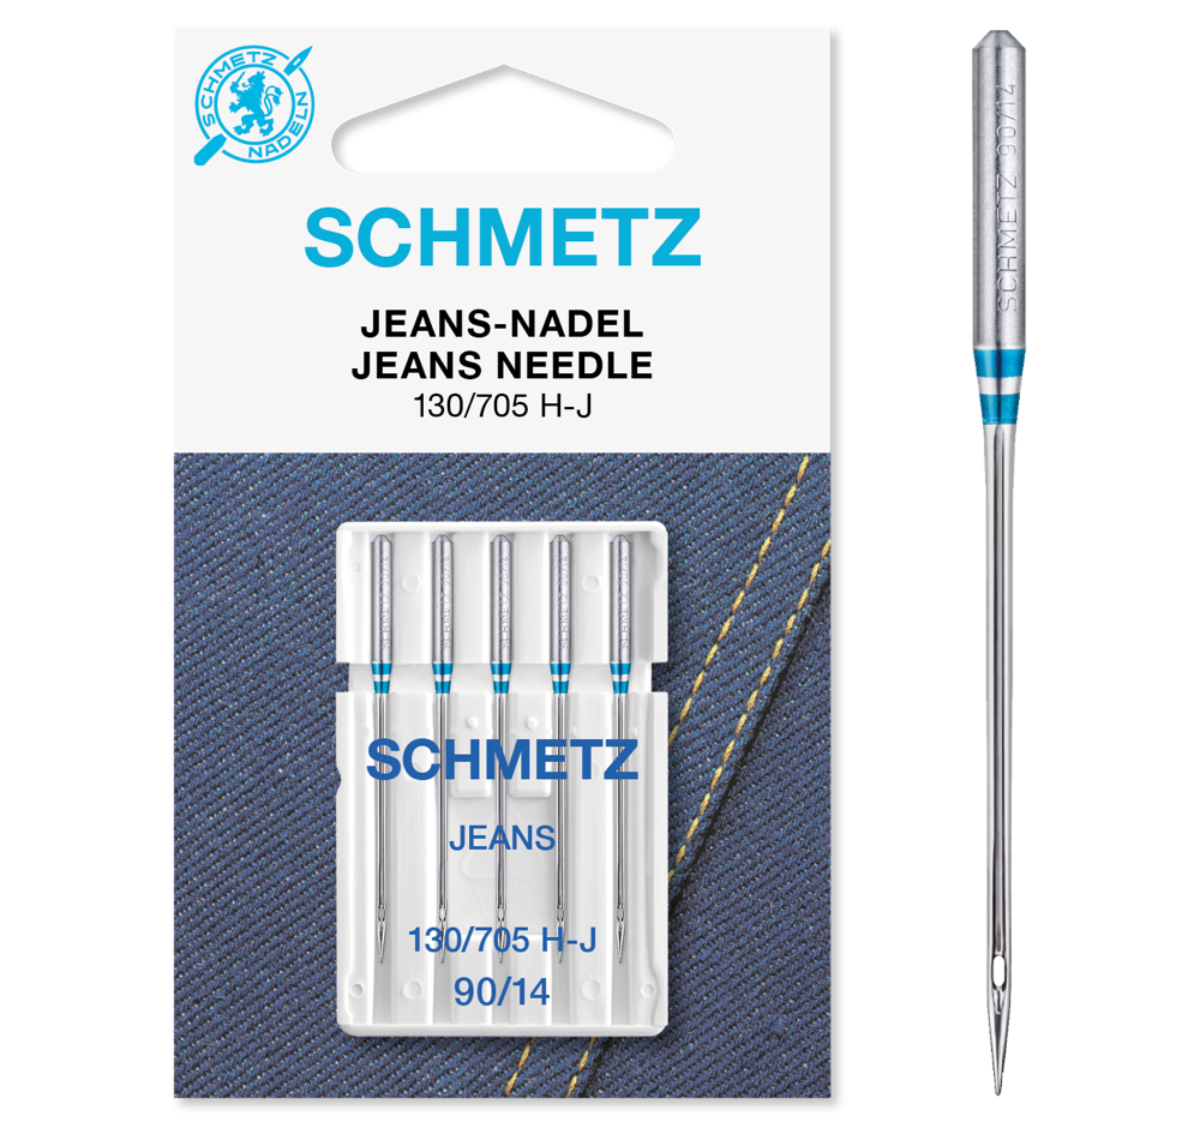 Schmetz Jeans Needle - 90/14 - The Batty Lady